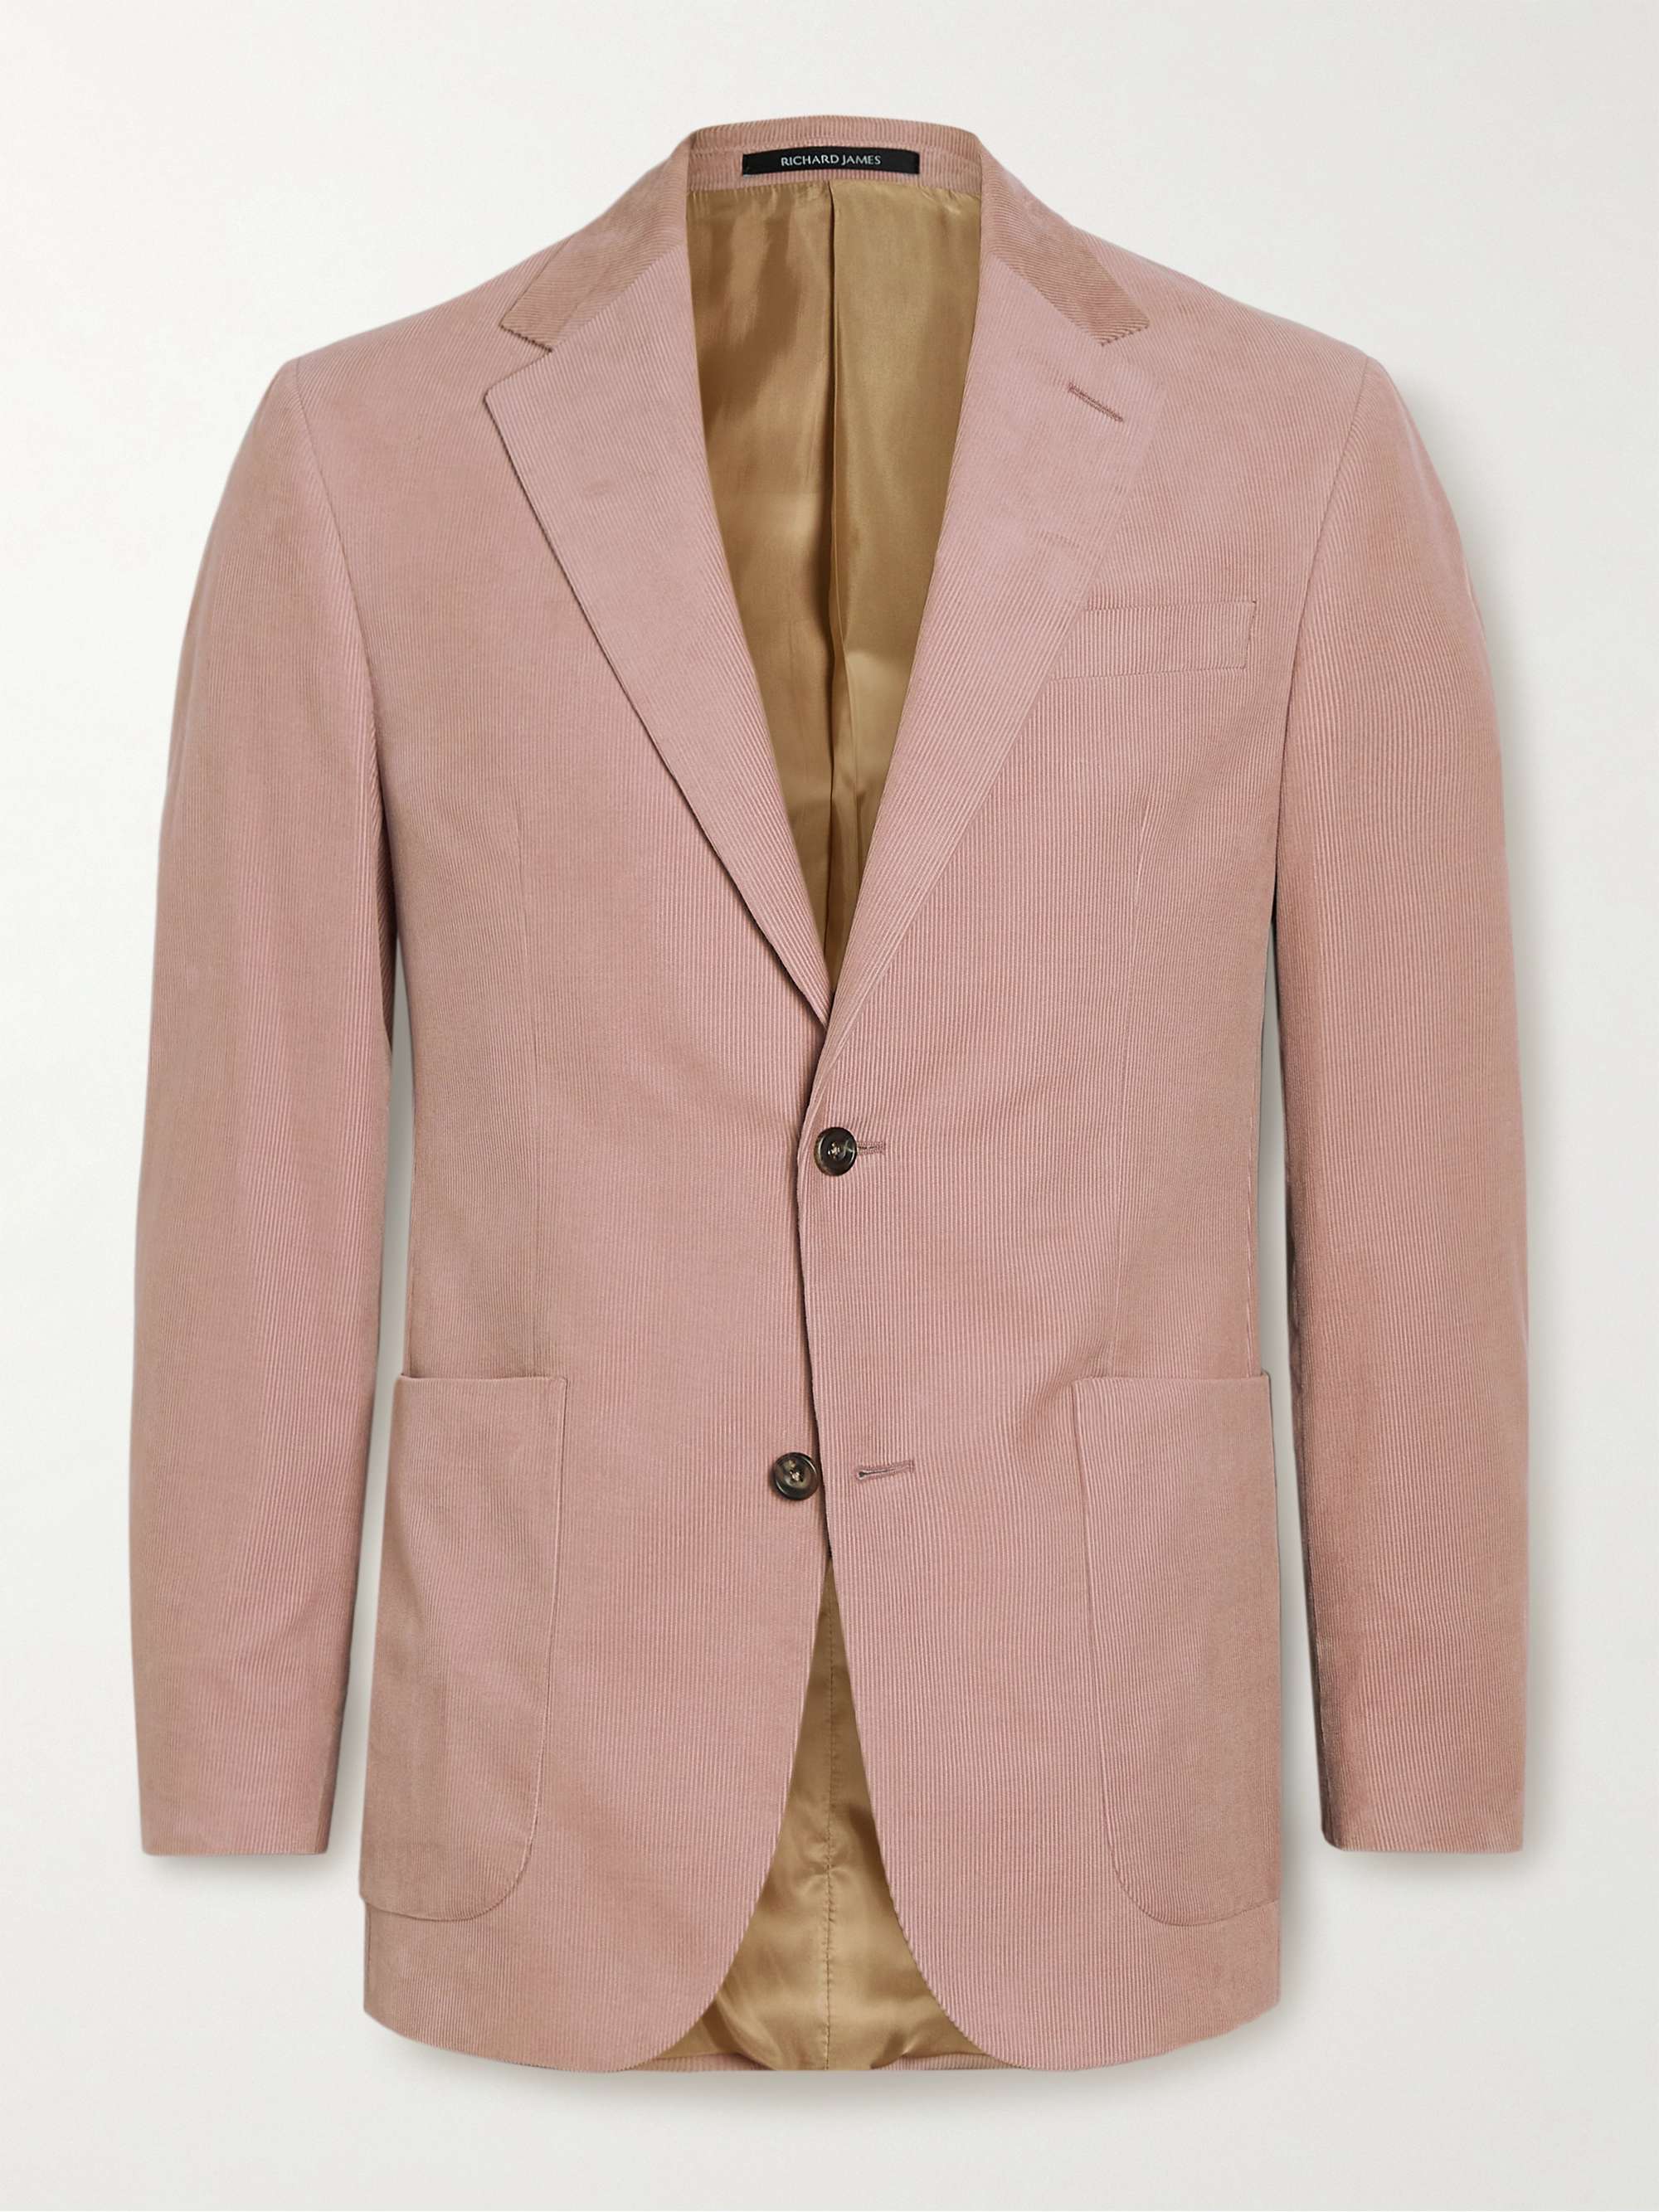 RICHARD JAMES Cotton-Needlecord Suit Jacket